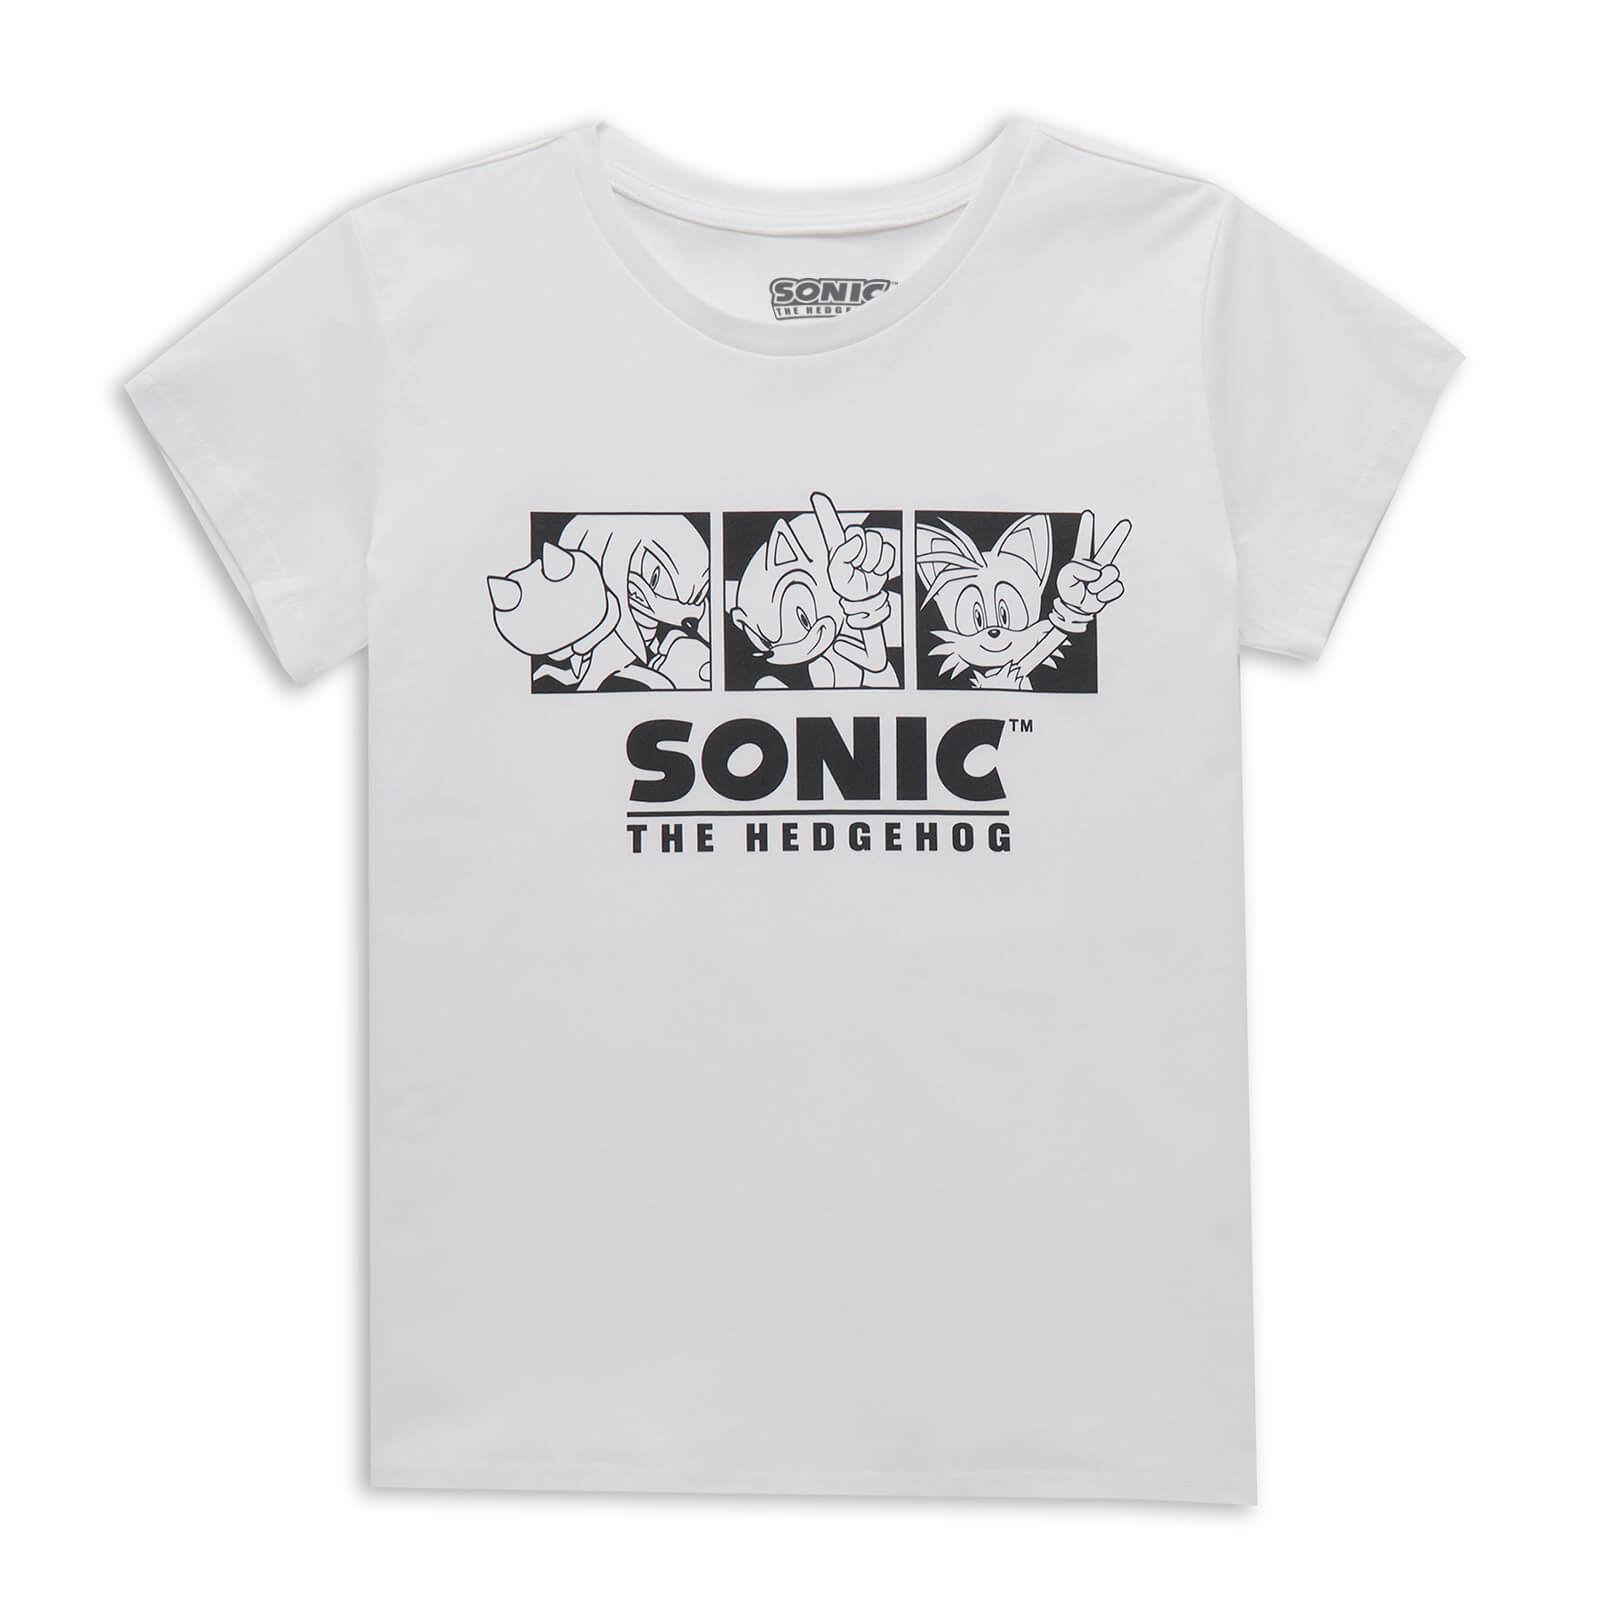 Sonic The Hedgehog Trio Women's T-Shirt - White - XS